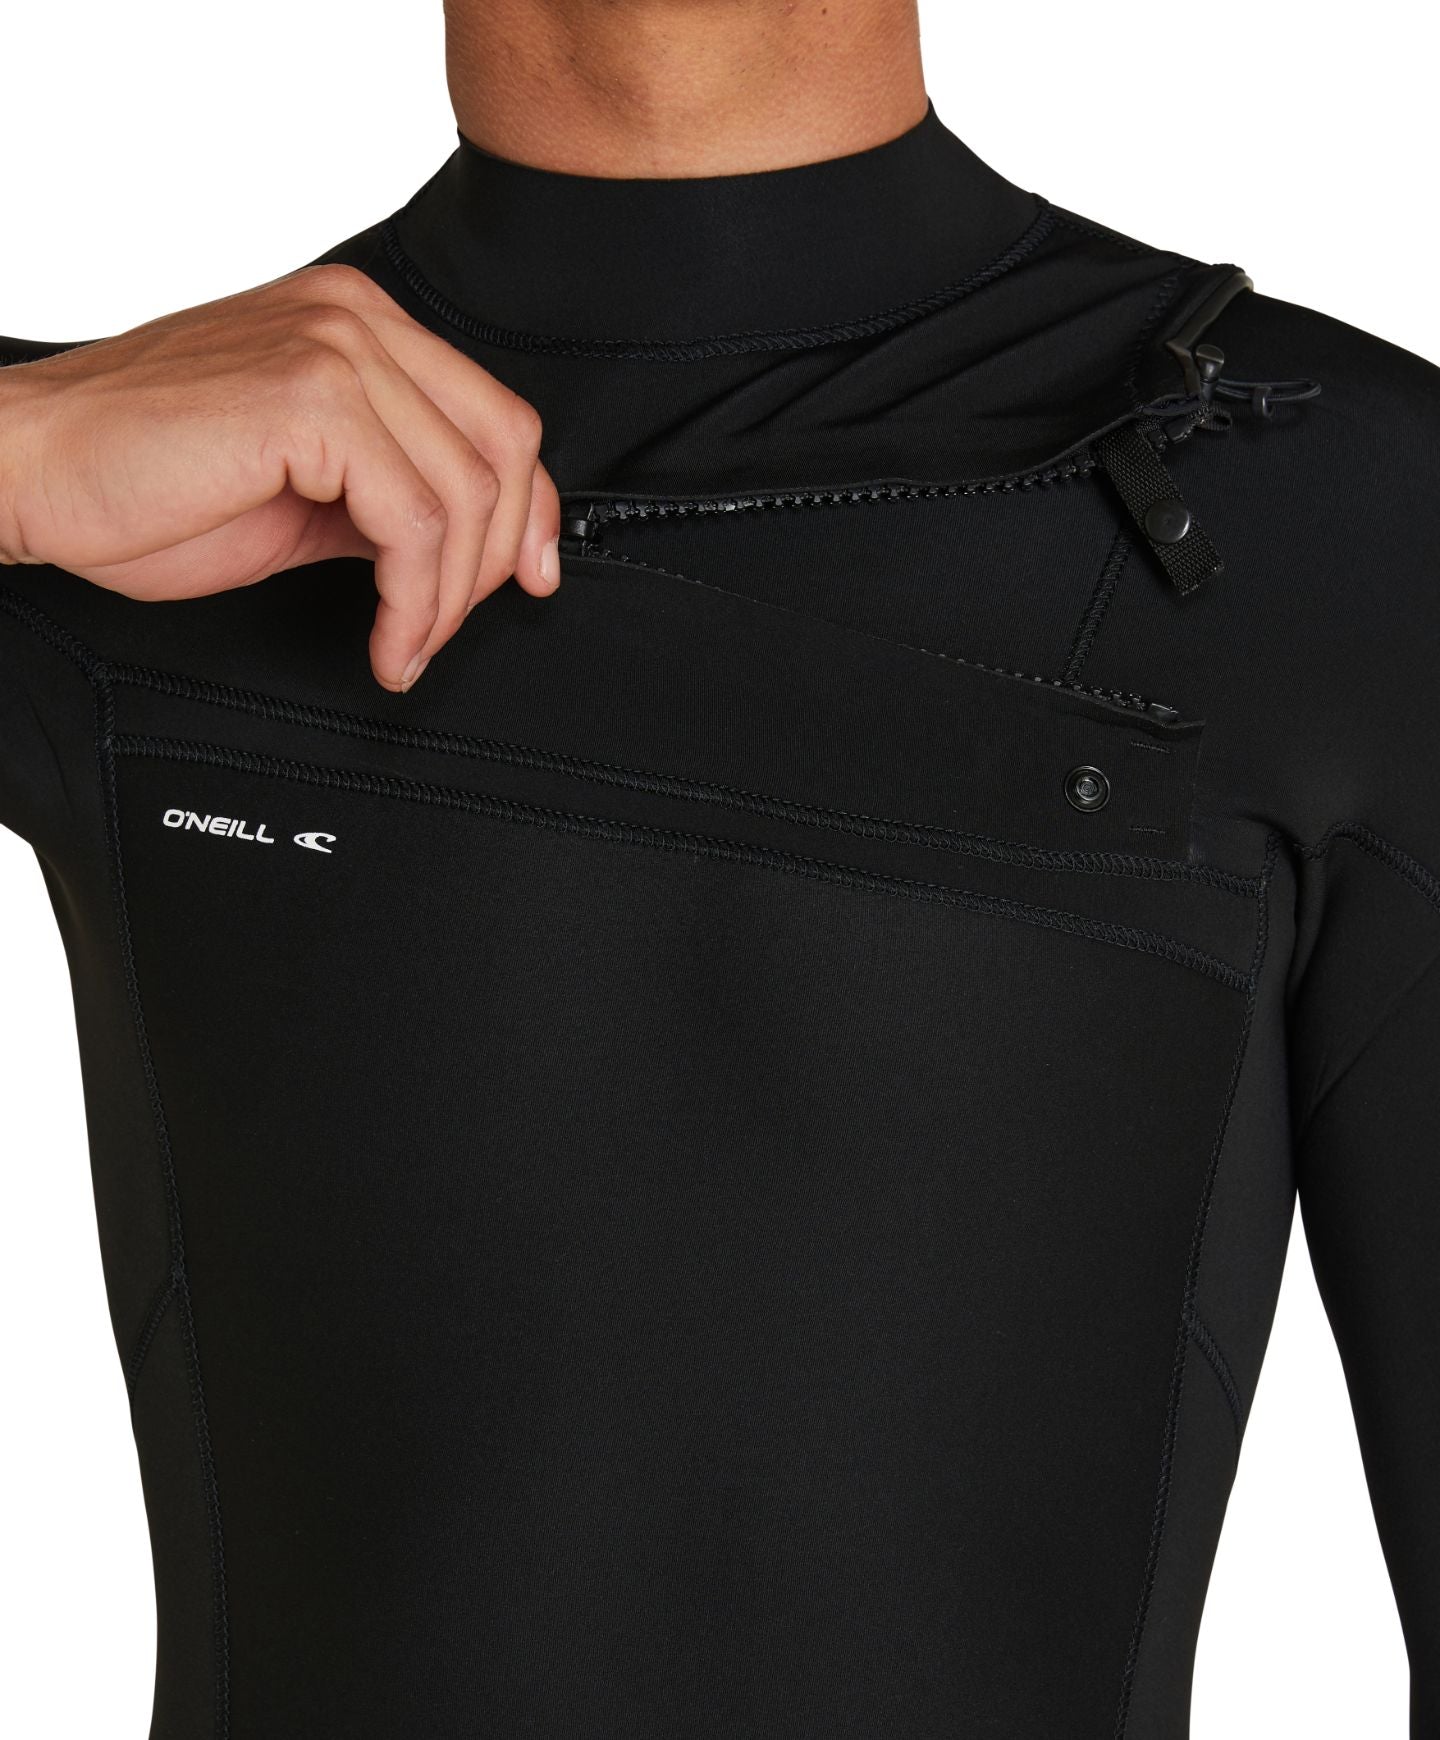 Defender Chest Zip Long Sleeve Spring Suit 2mm Wetsuit - Black